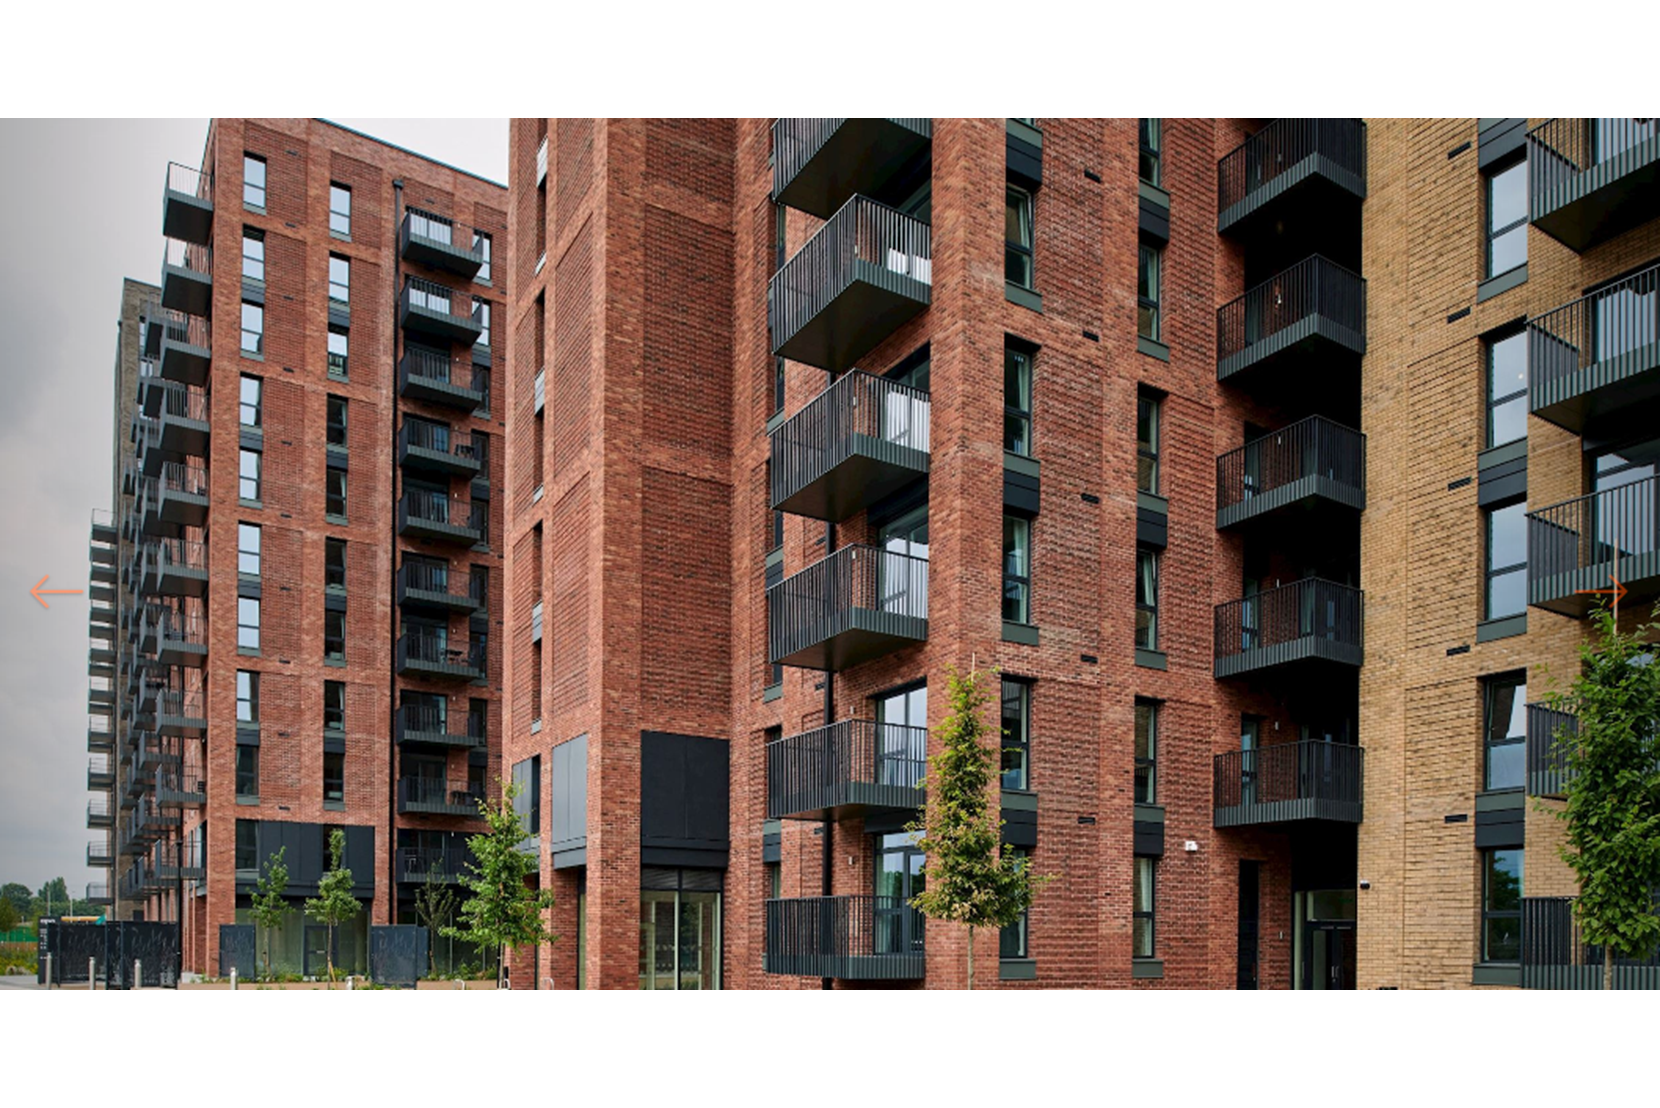 Apartment-APO-Group-Barking-Greater-London-external-development